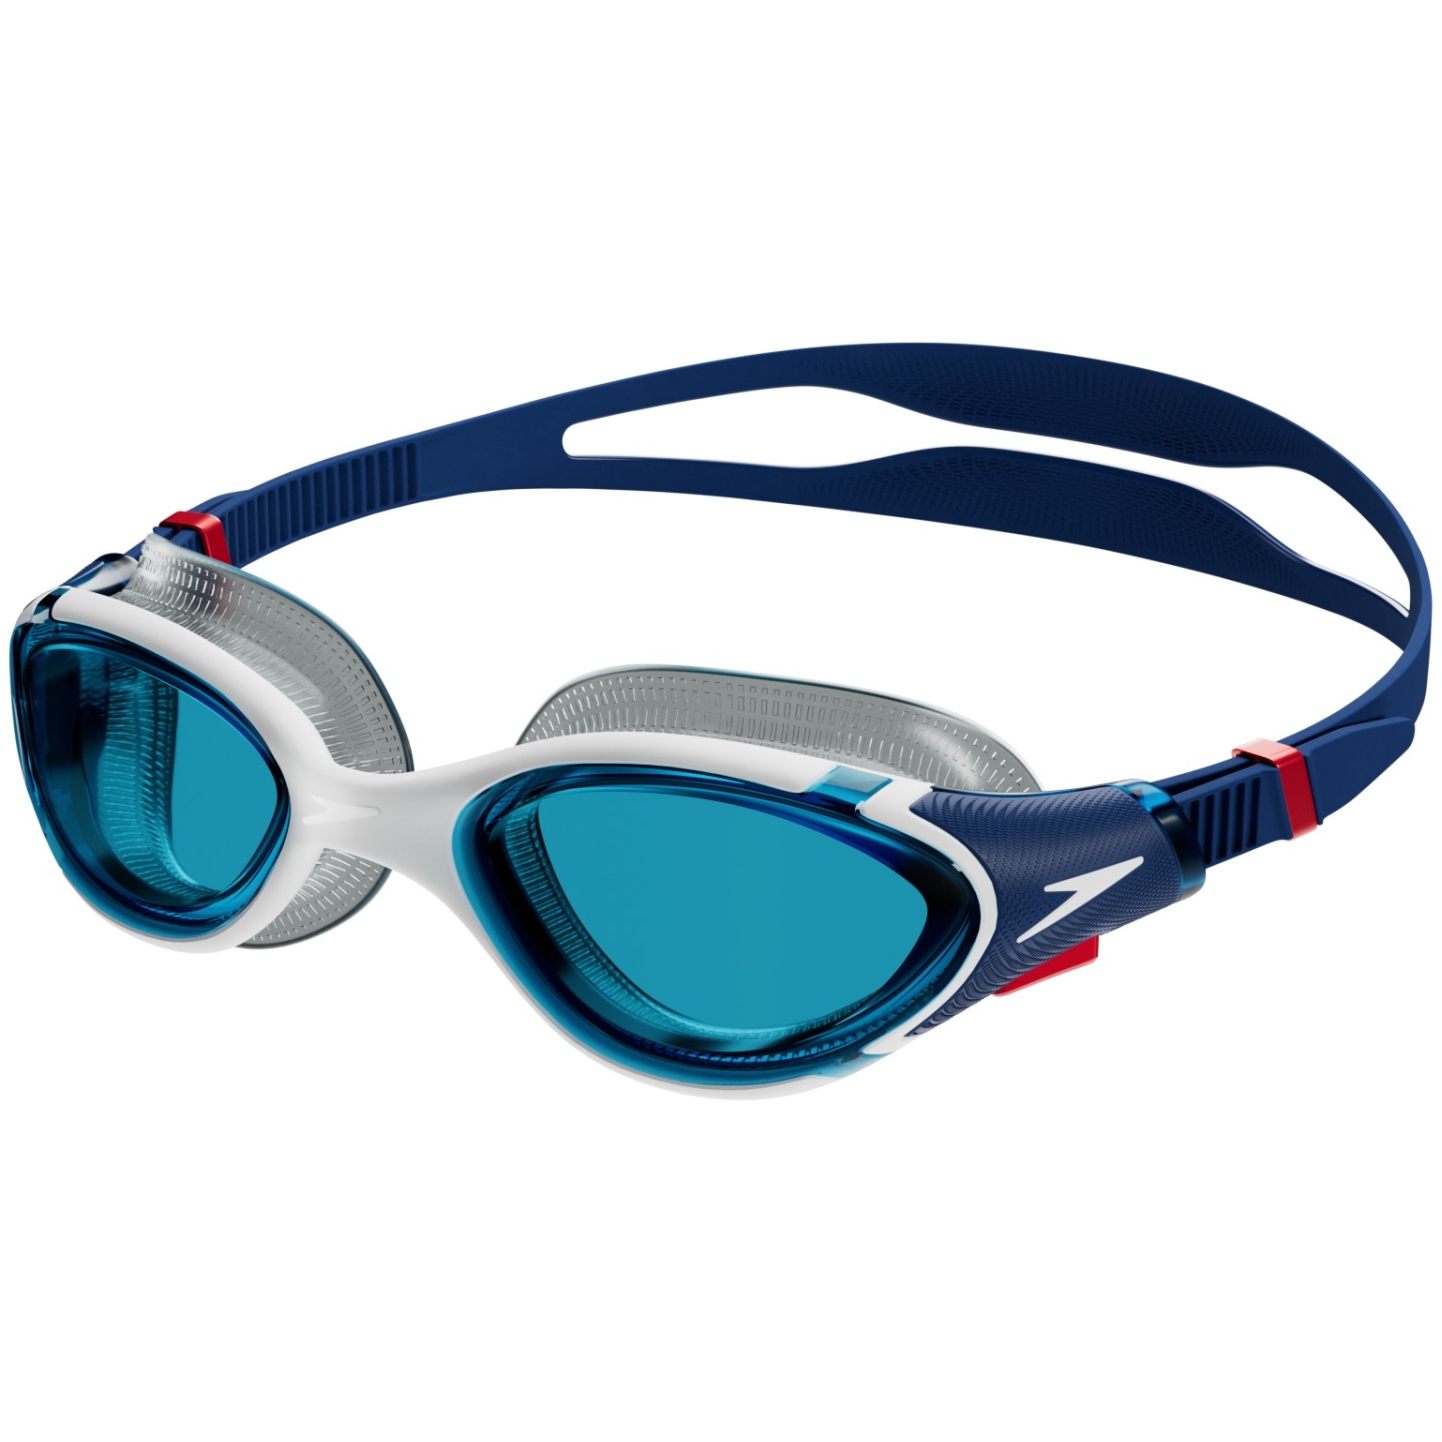 Picture of Speedo Futura Biofuse Flexiseal Swimming Goggles - ammonite blue/white/red/blue